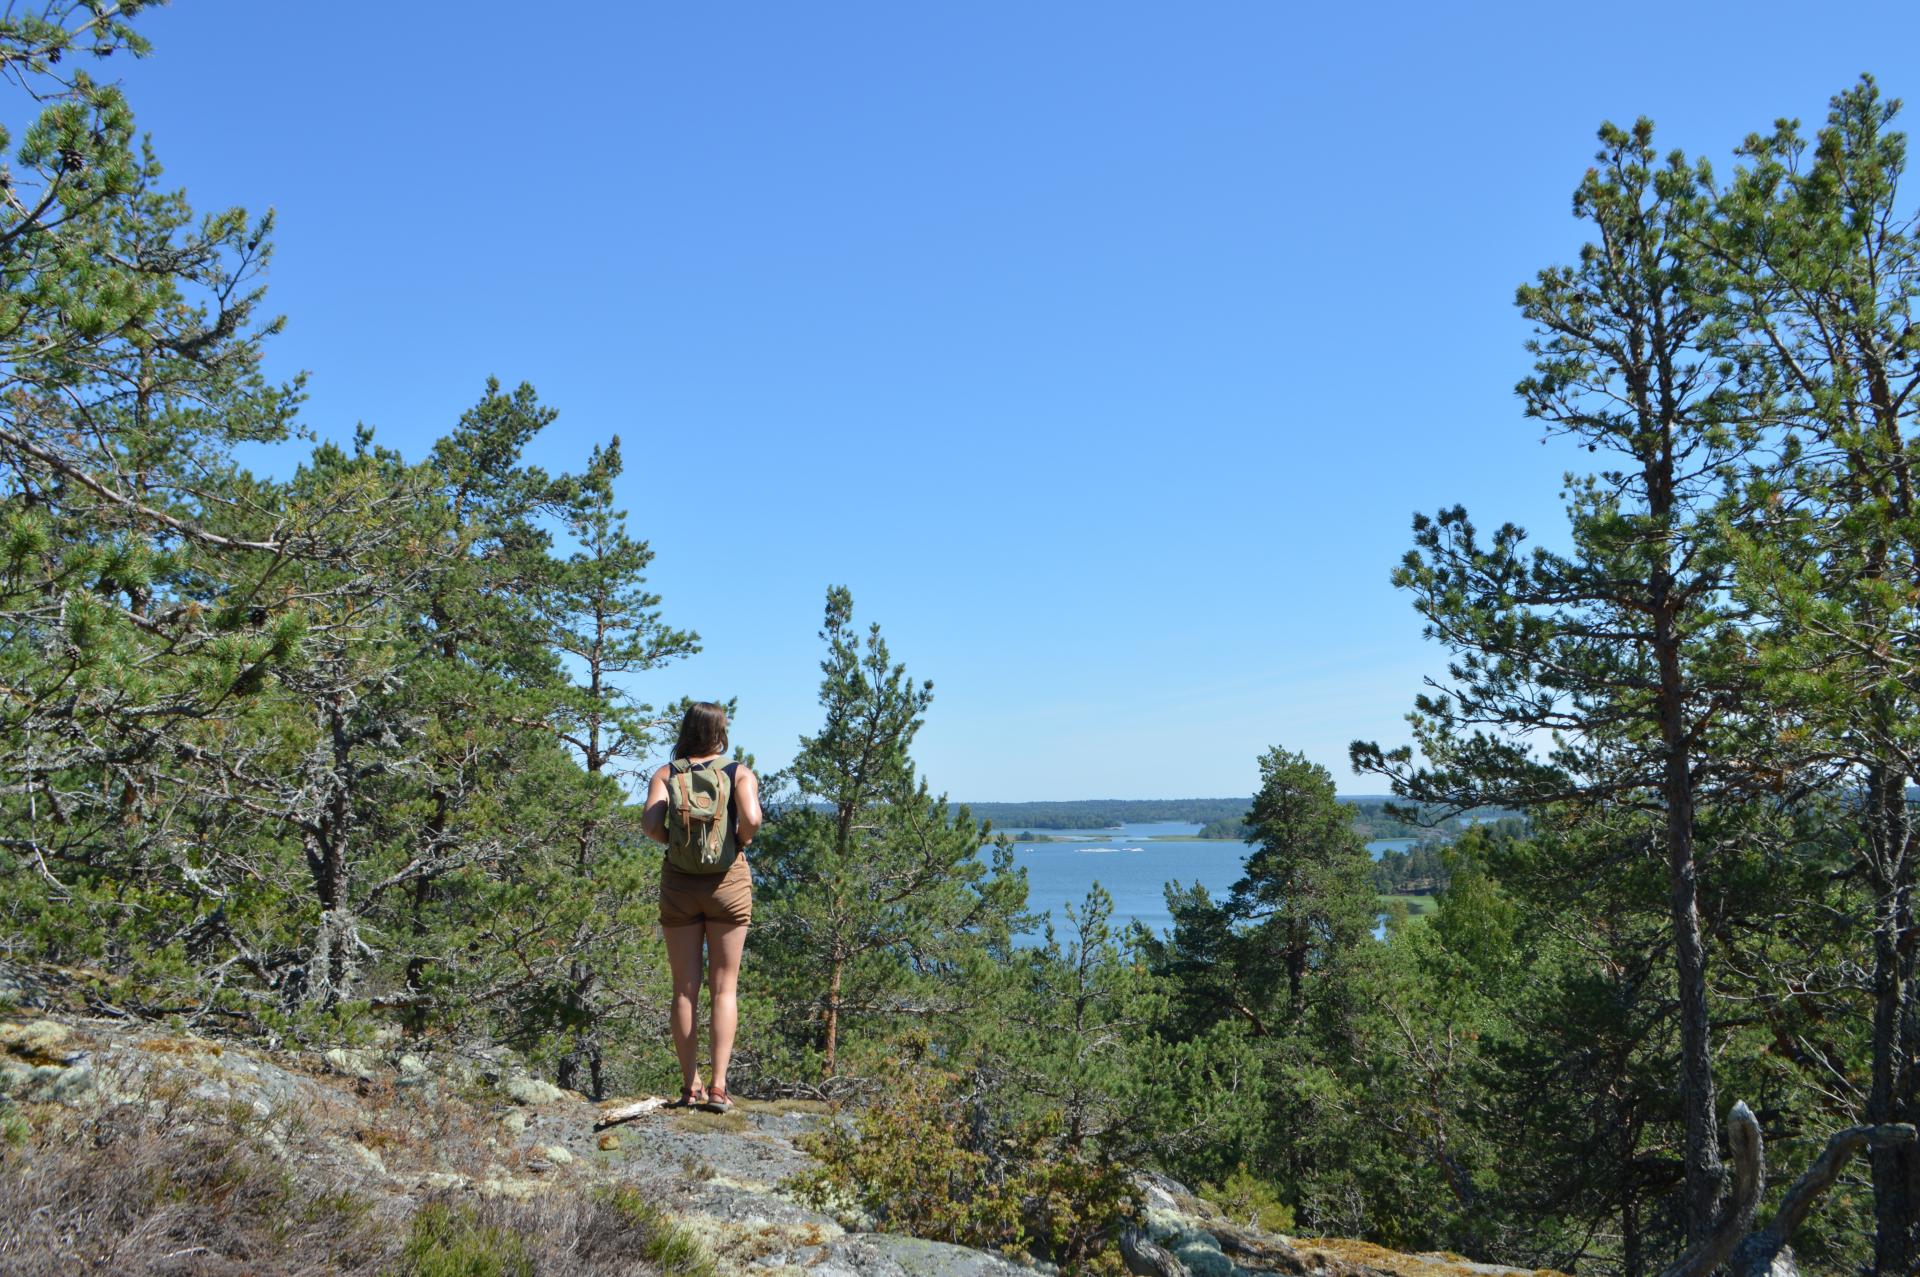 Sormland Sweden travel guide: explore Stockholm archipelago islands the girl outdoors